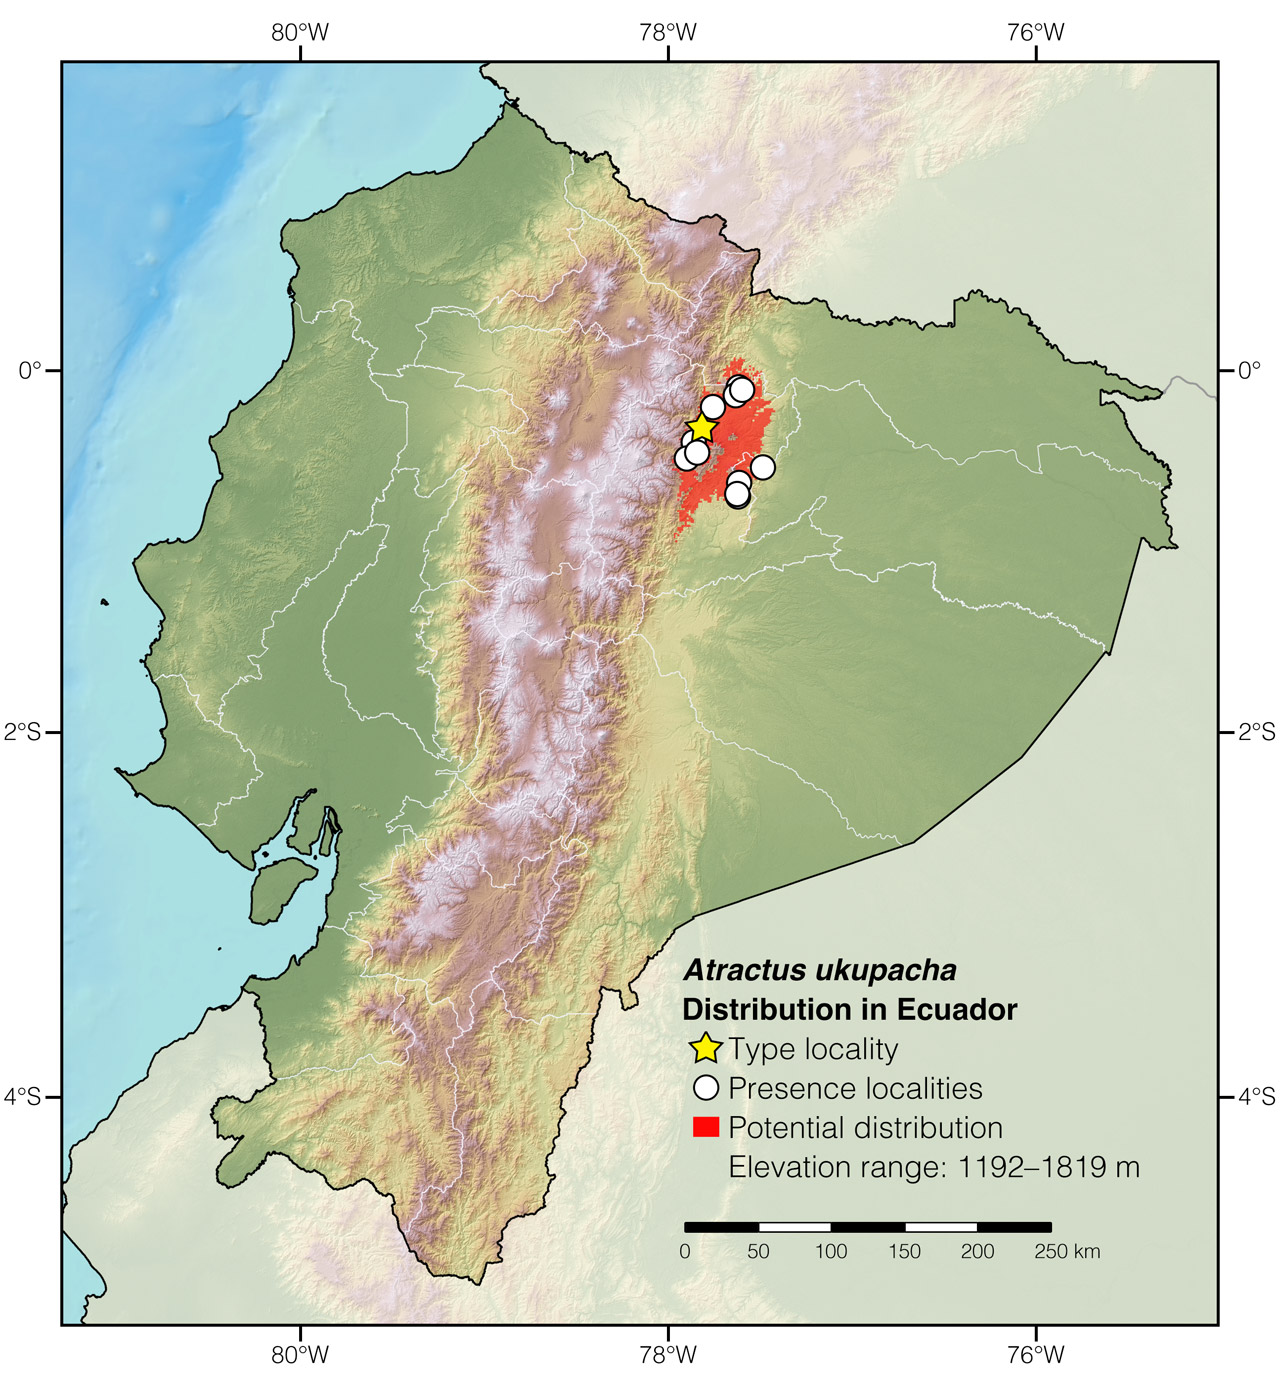 Distribution of Atractus ukupacha in Ecuador